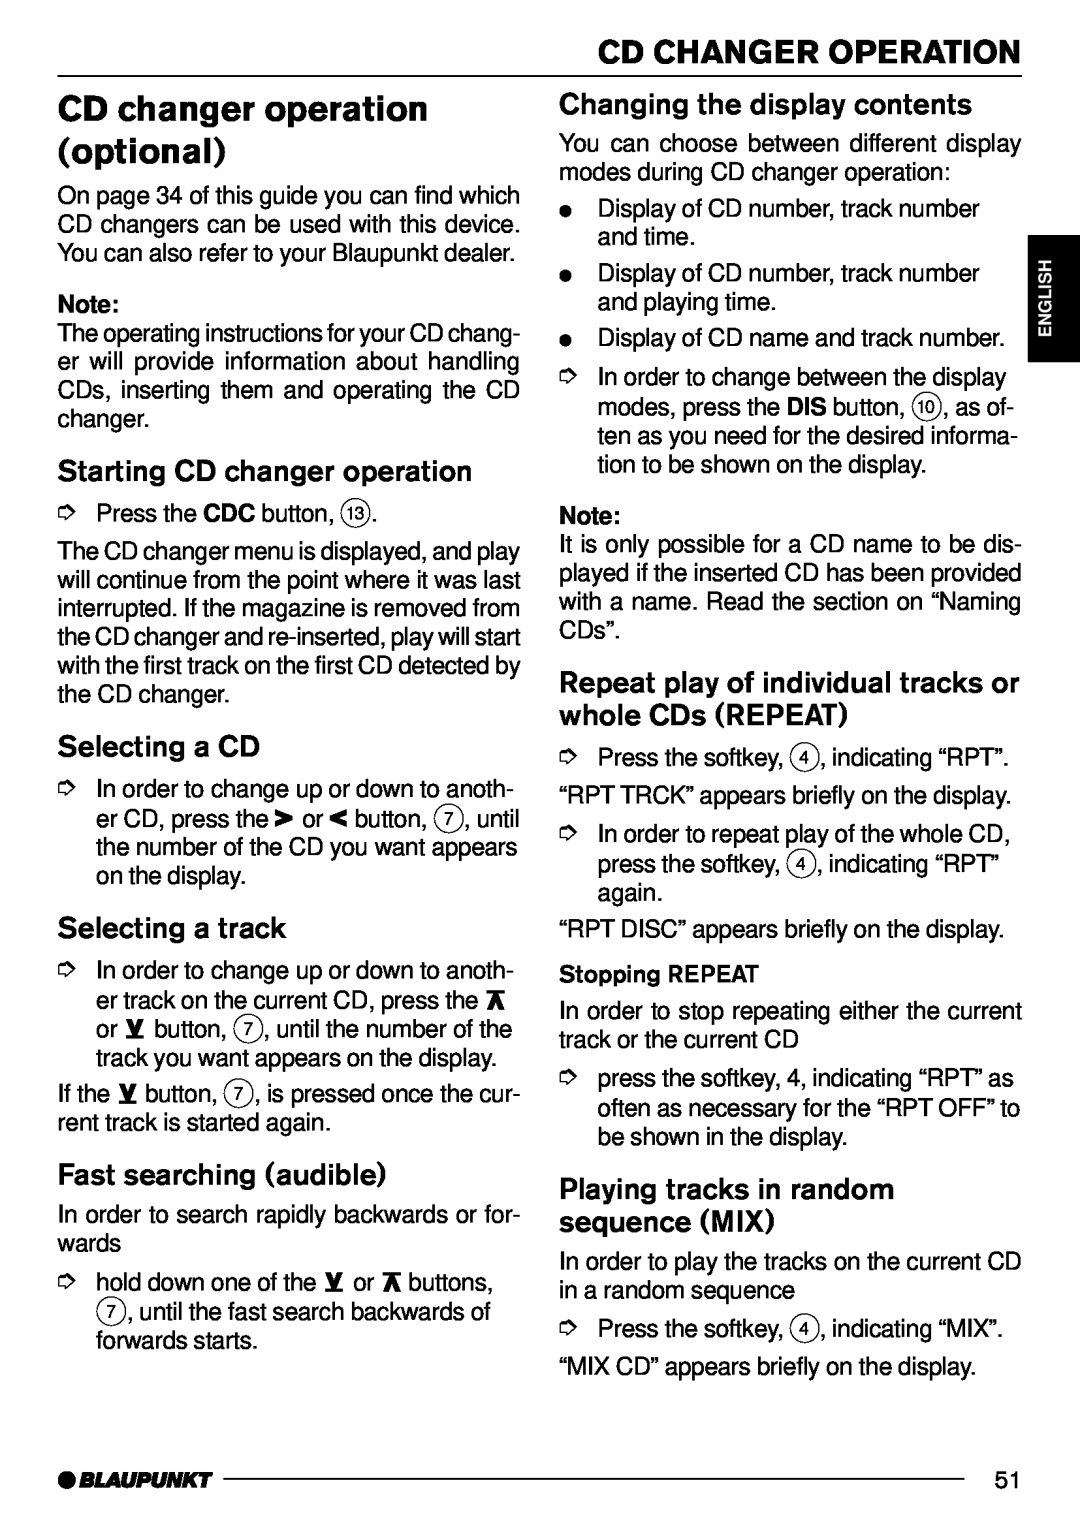 Blaupunkt Orlando CD70 CD changer operation optional, Cd Changer Operation, Starting CD changer operation, Selecting a CD 